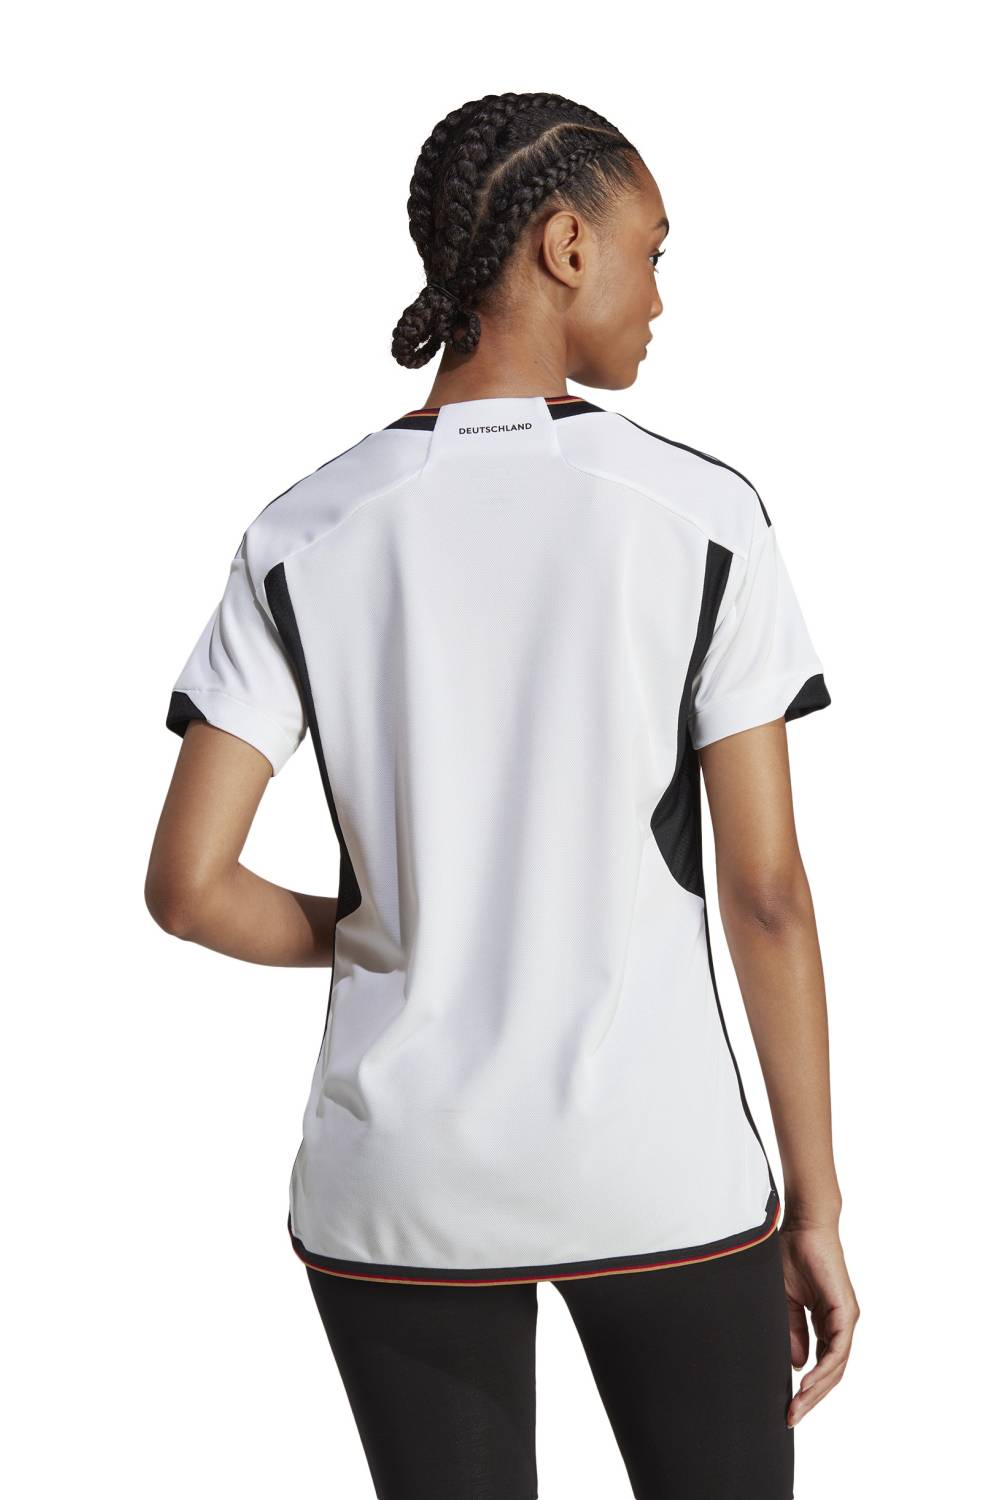 ADIDAS - Camiseta De Fútbol Alemania Local Mujer Adidas